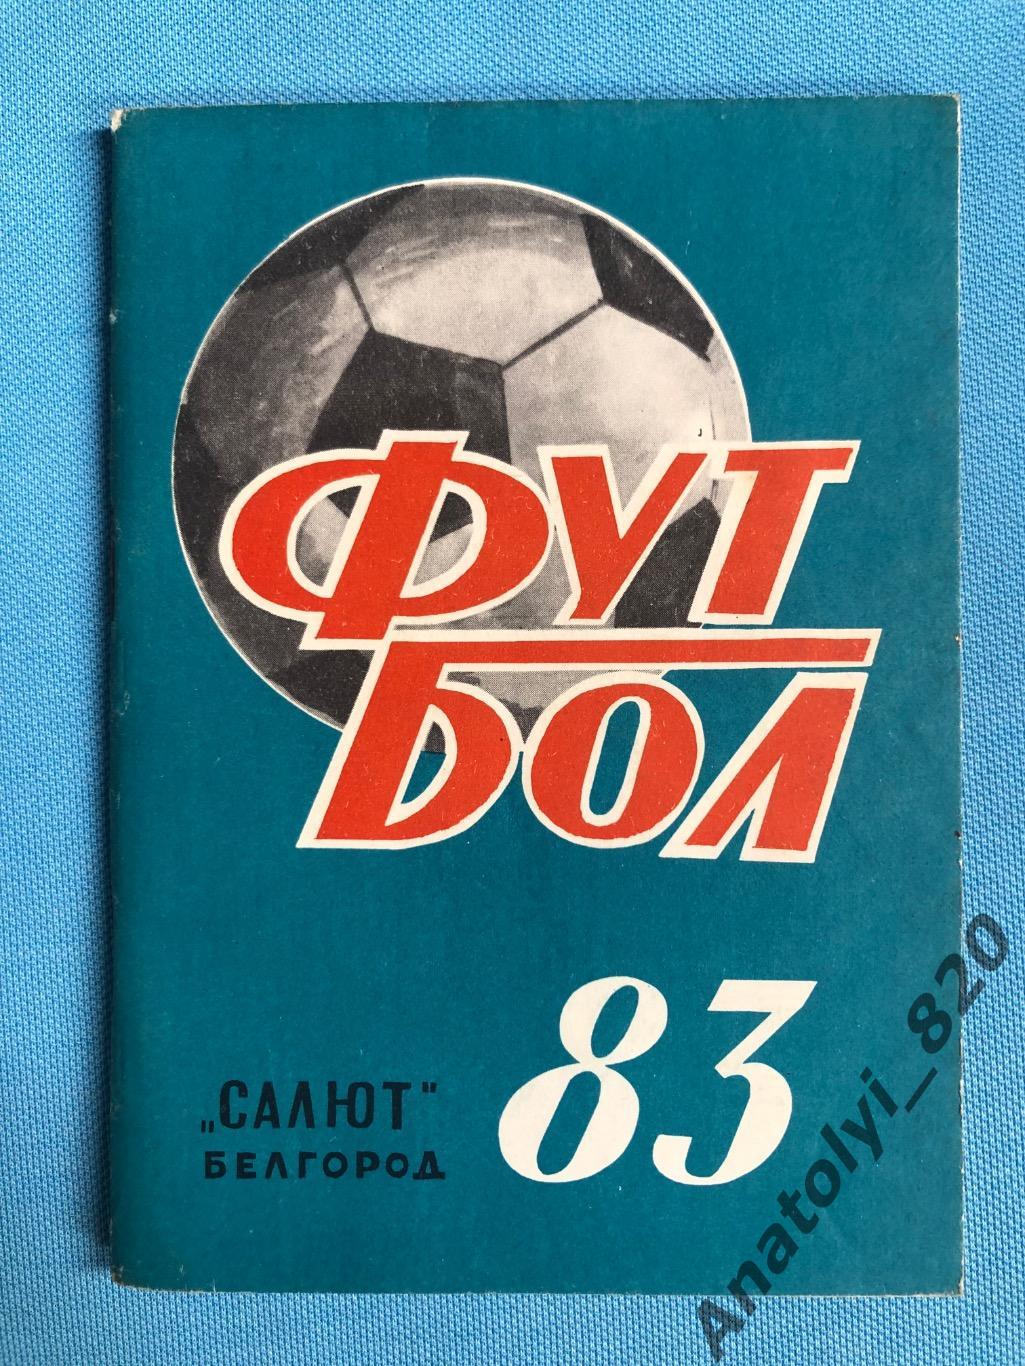 Белгород 1983 год календарь - справочник